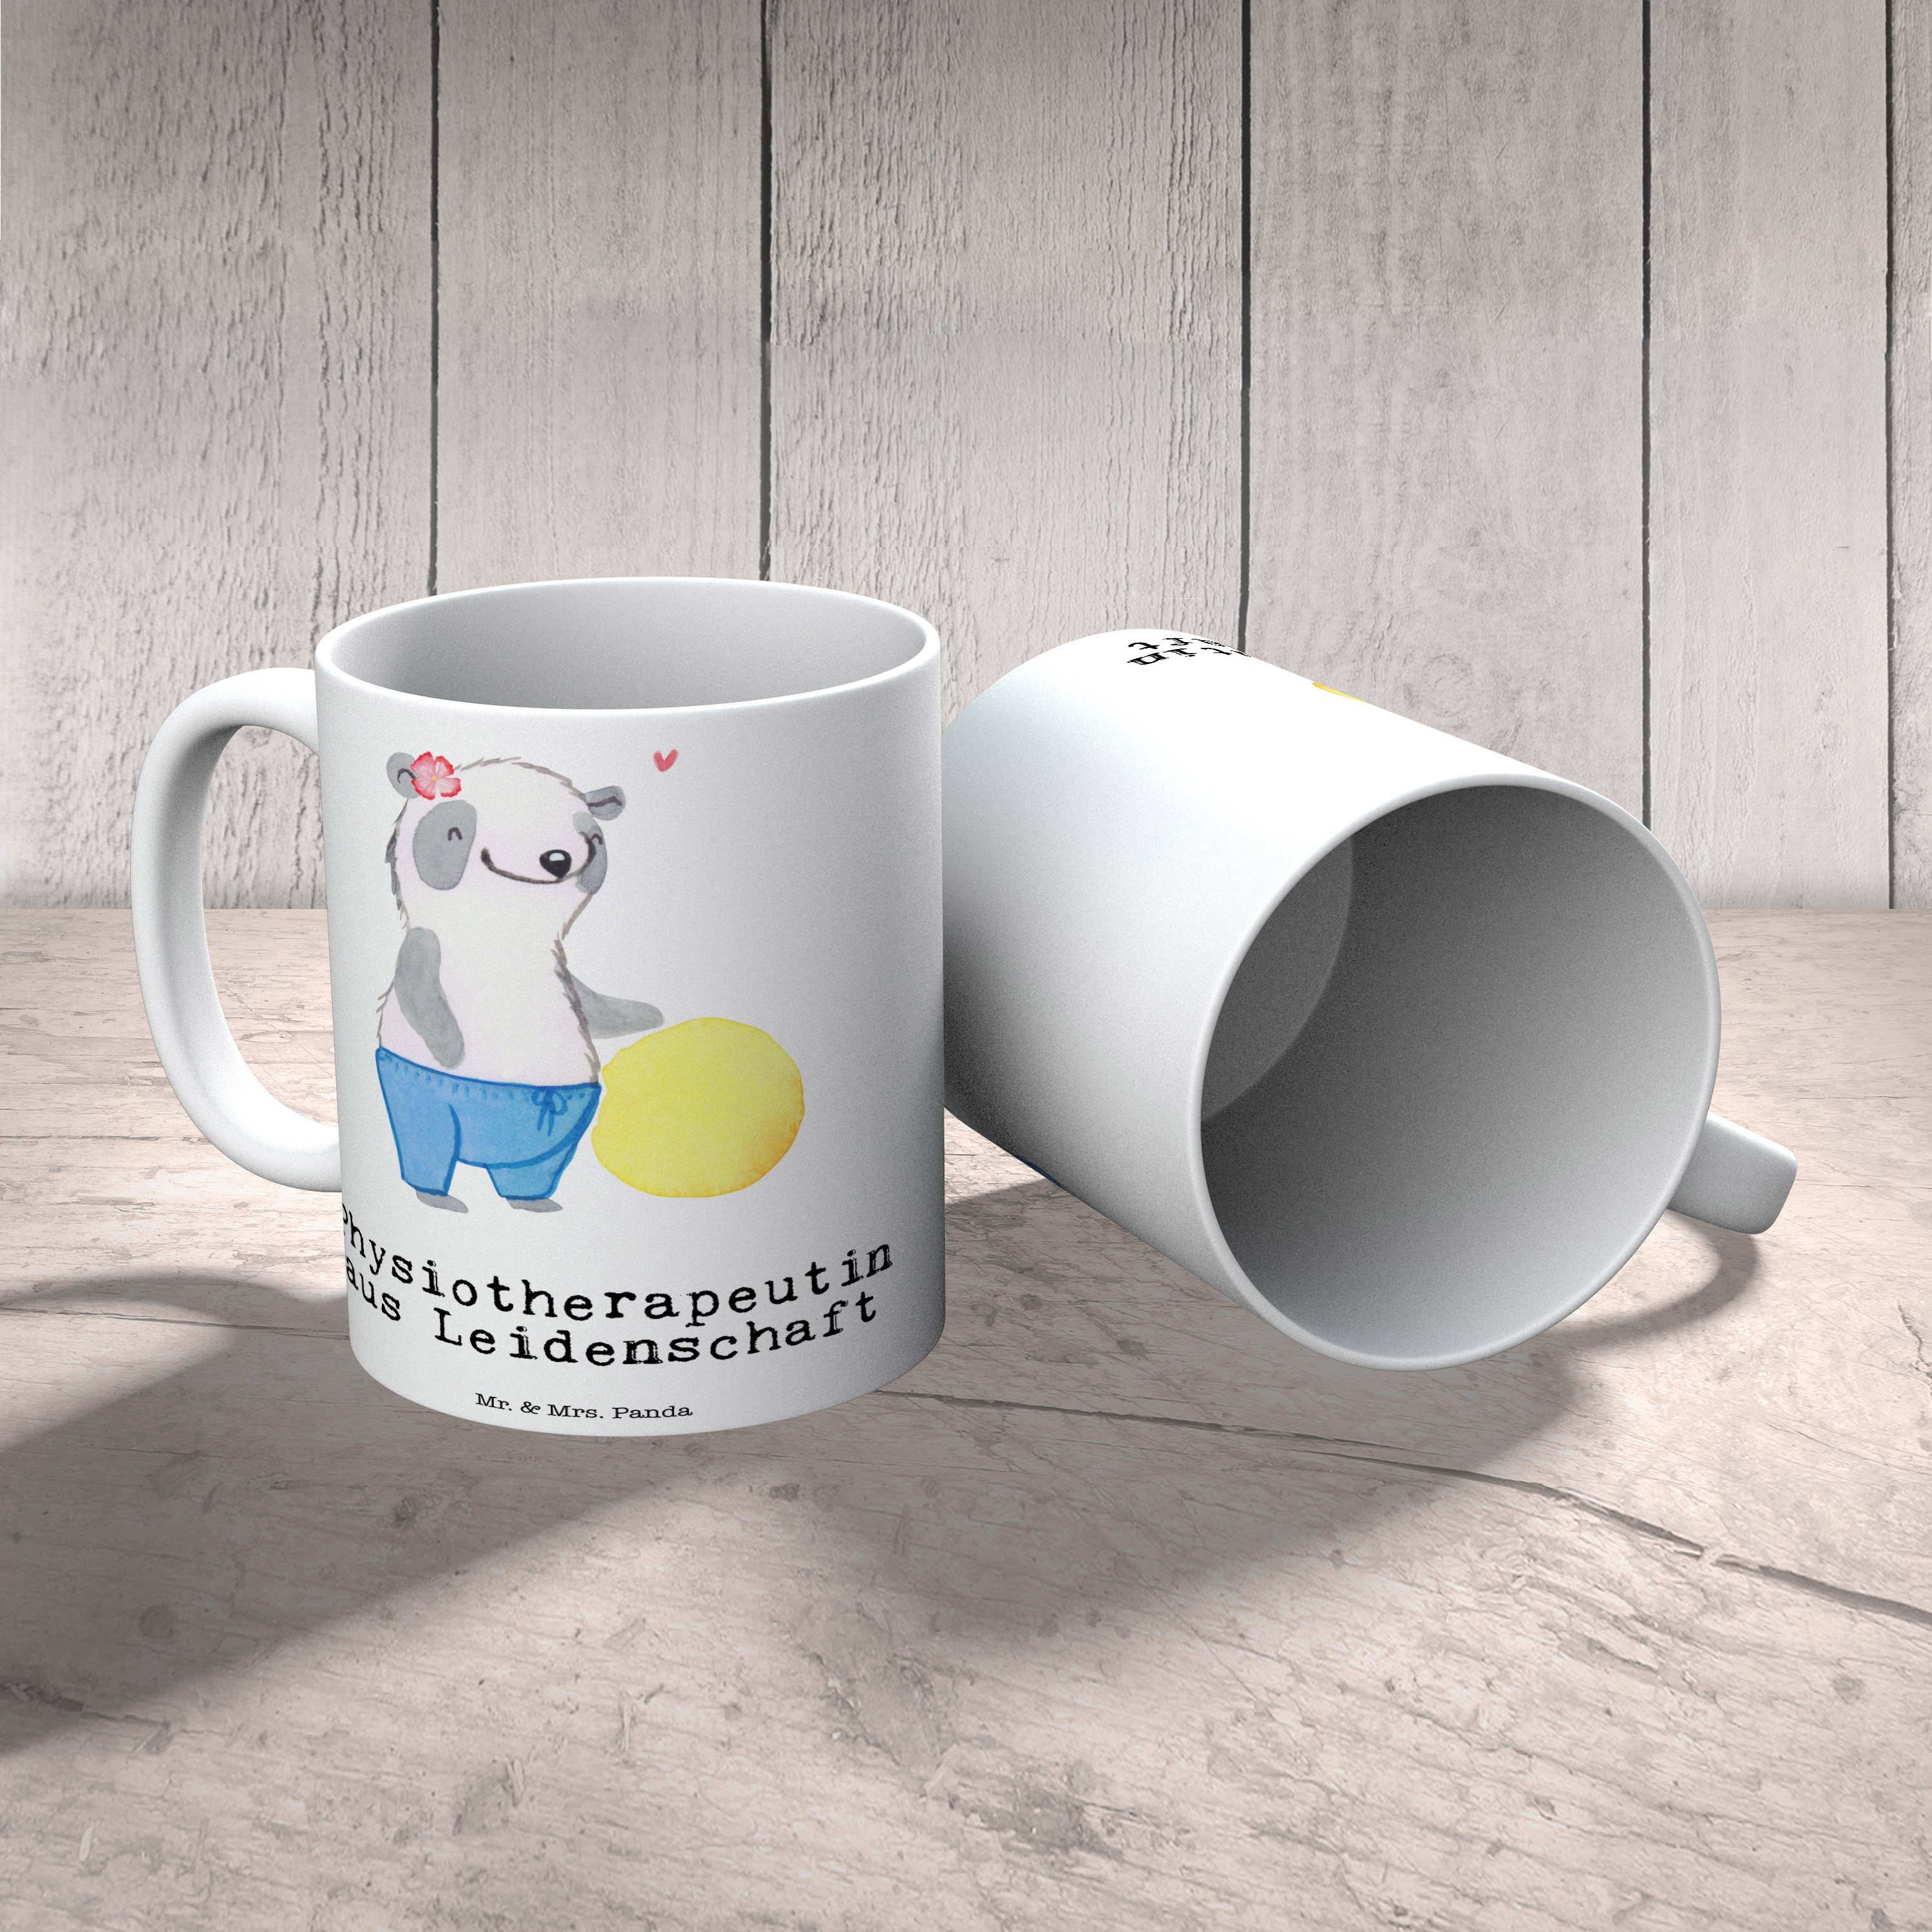 Mr. & Mrs. Panda Tasse Weiß T, Leidenschaft Keramik - aus Geschenk, Physiotherapeutin Kaffeebecher, 